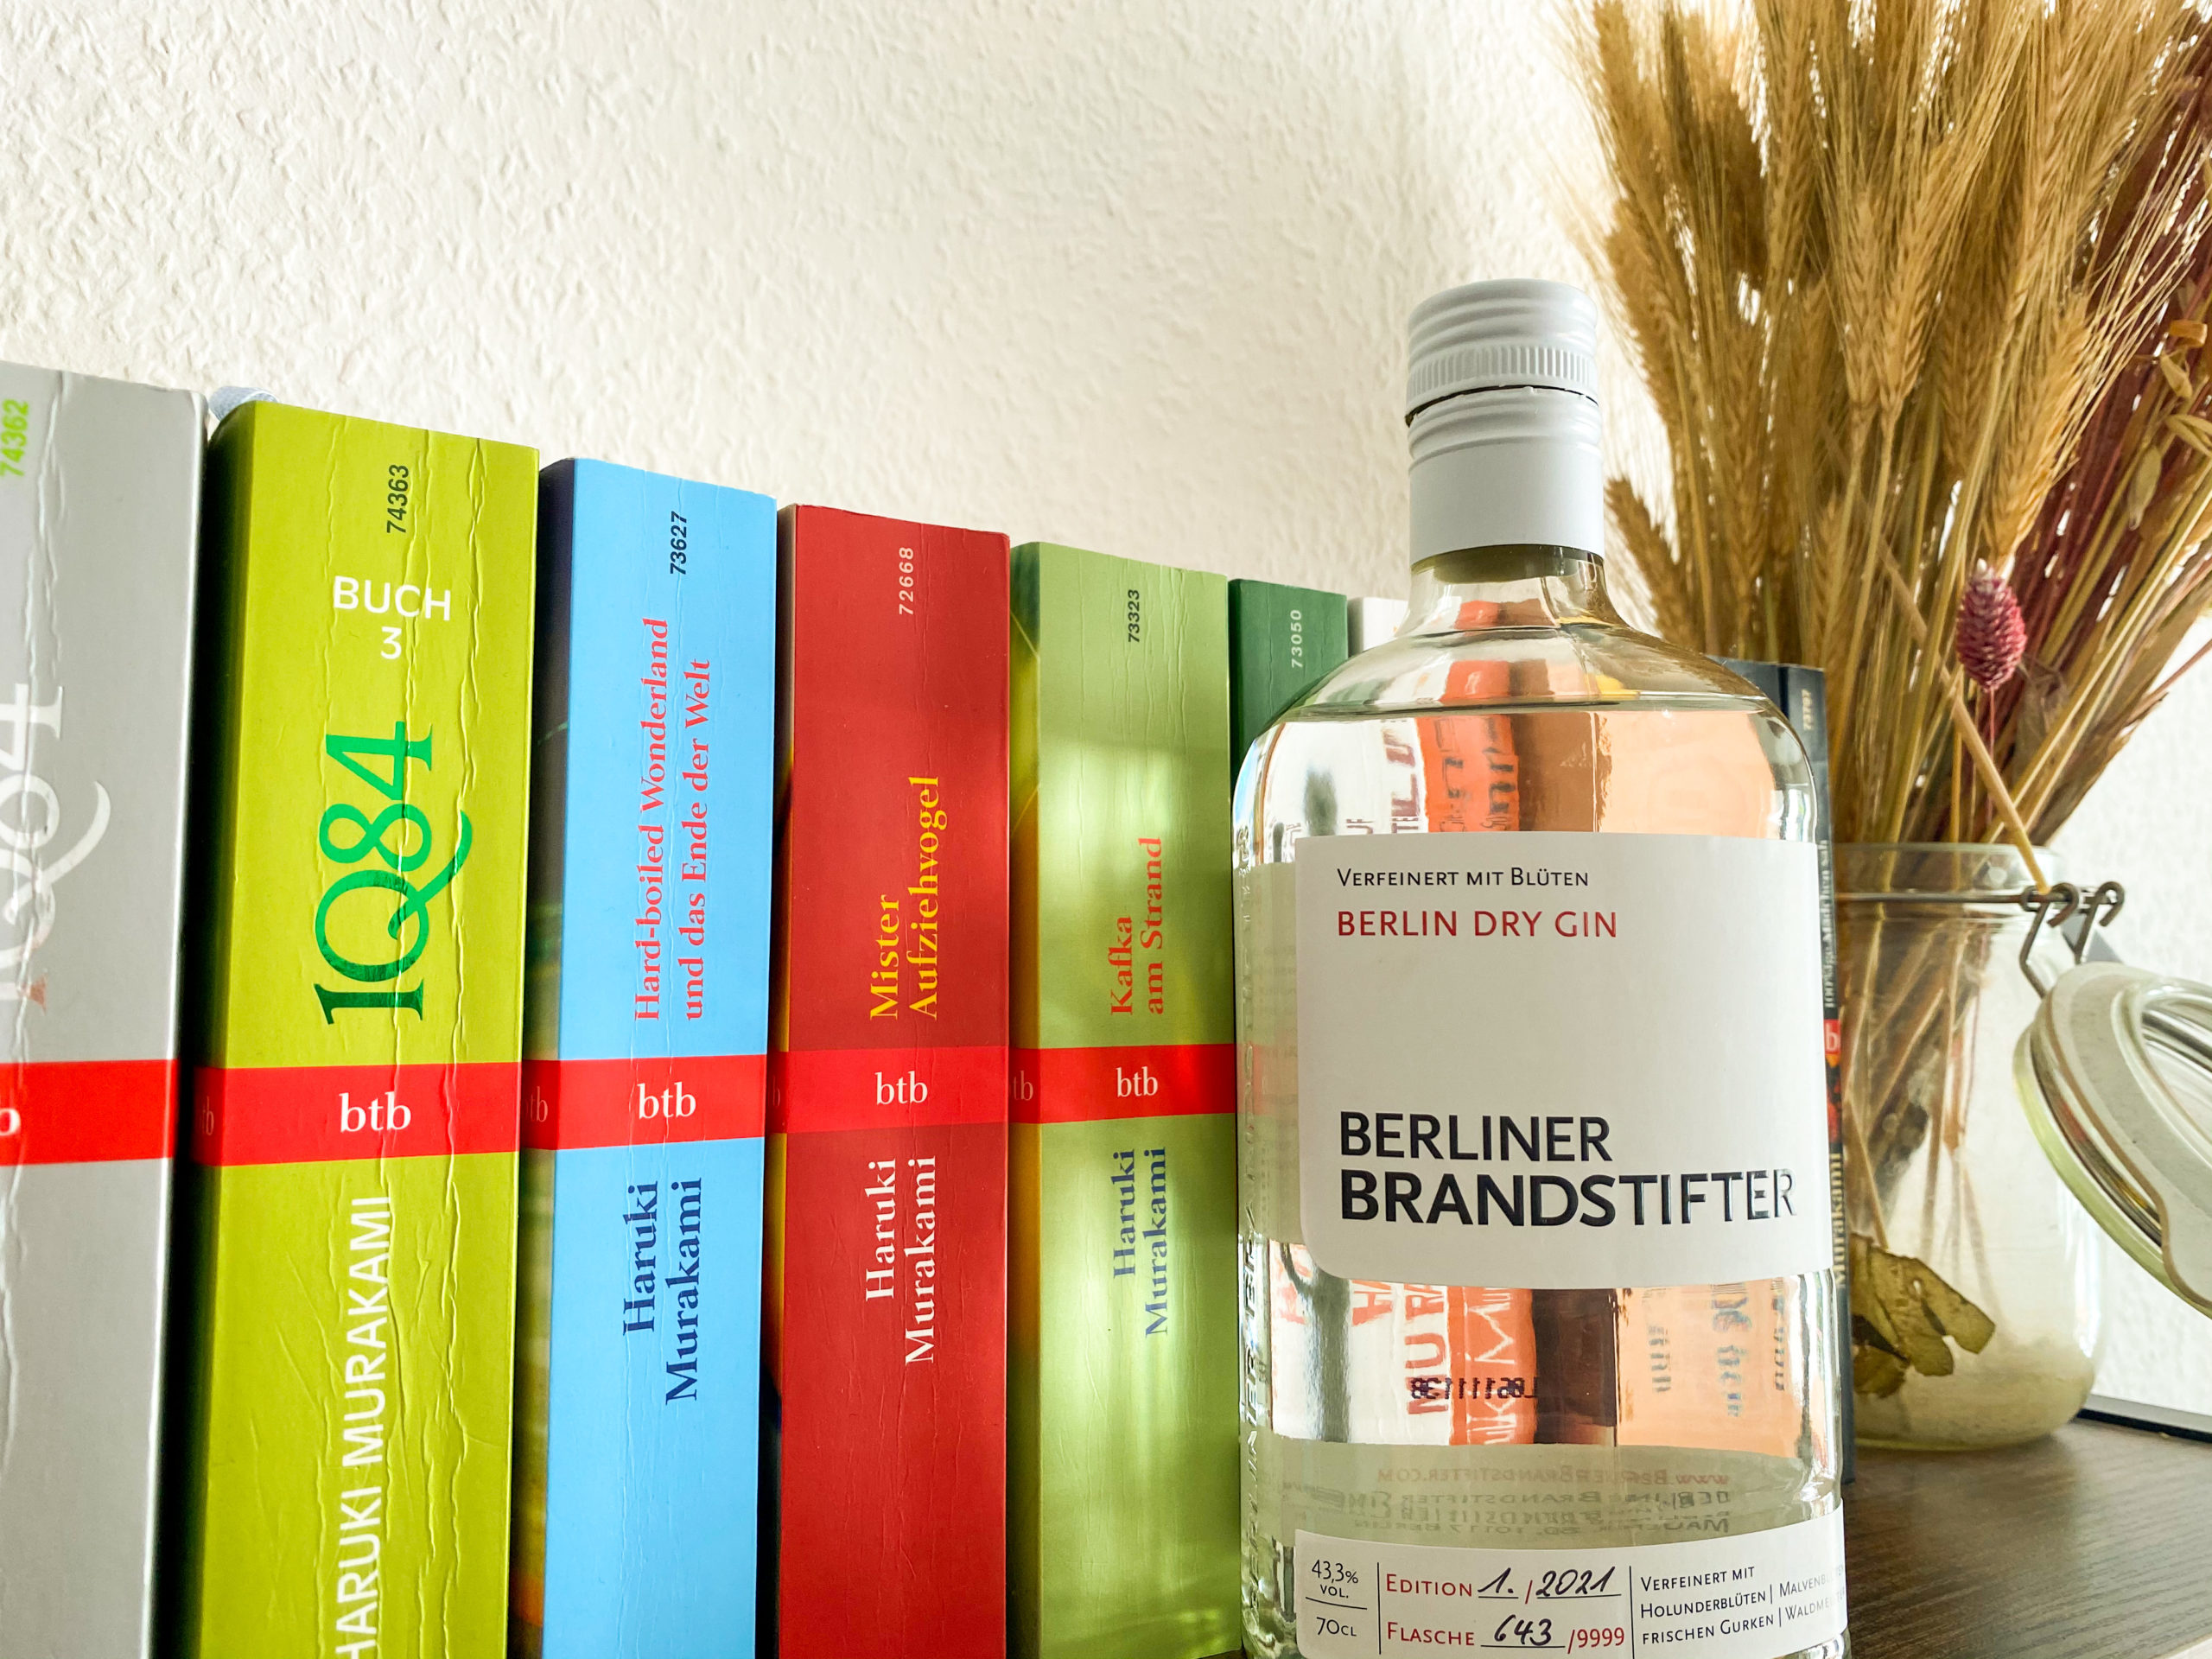 Berliner Brandstifter stellt Gin auch alkoholfrei her.